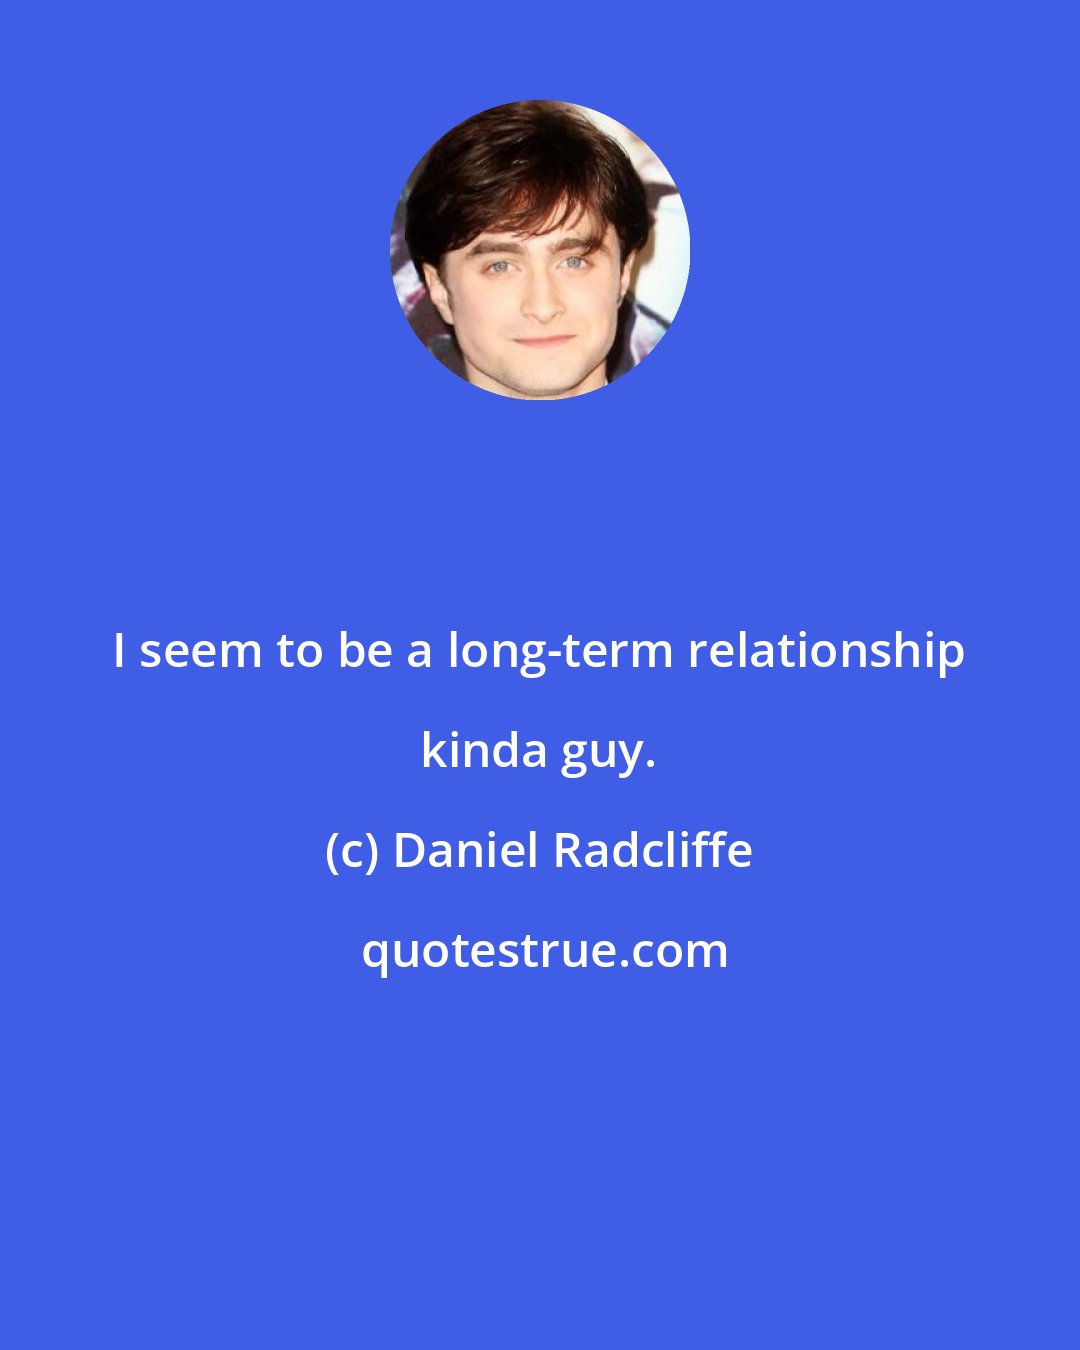 Daniel Radcliffe: I seem to be a long-term relationship kinda guy.